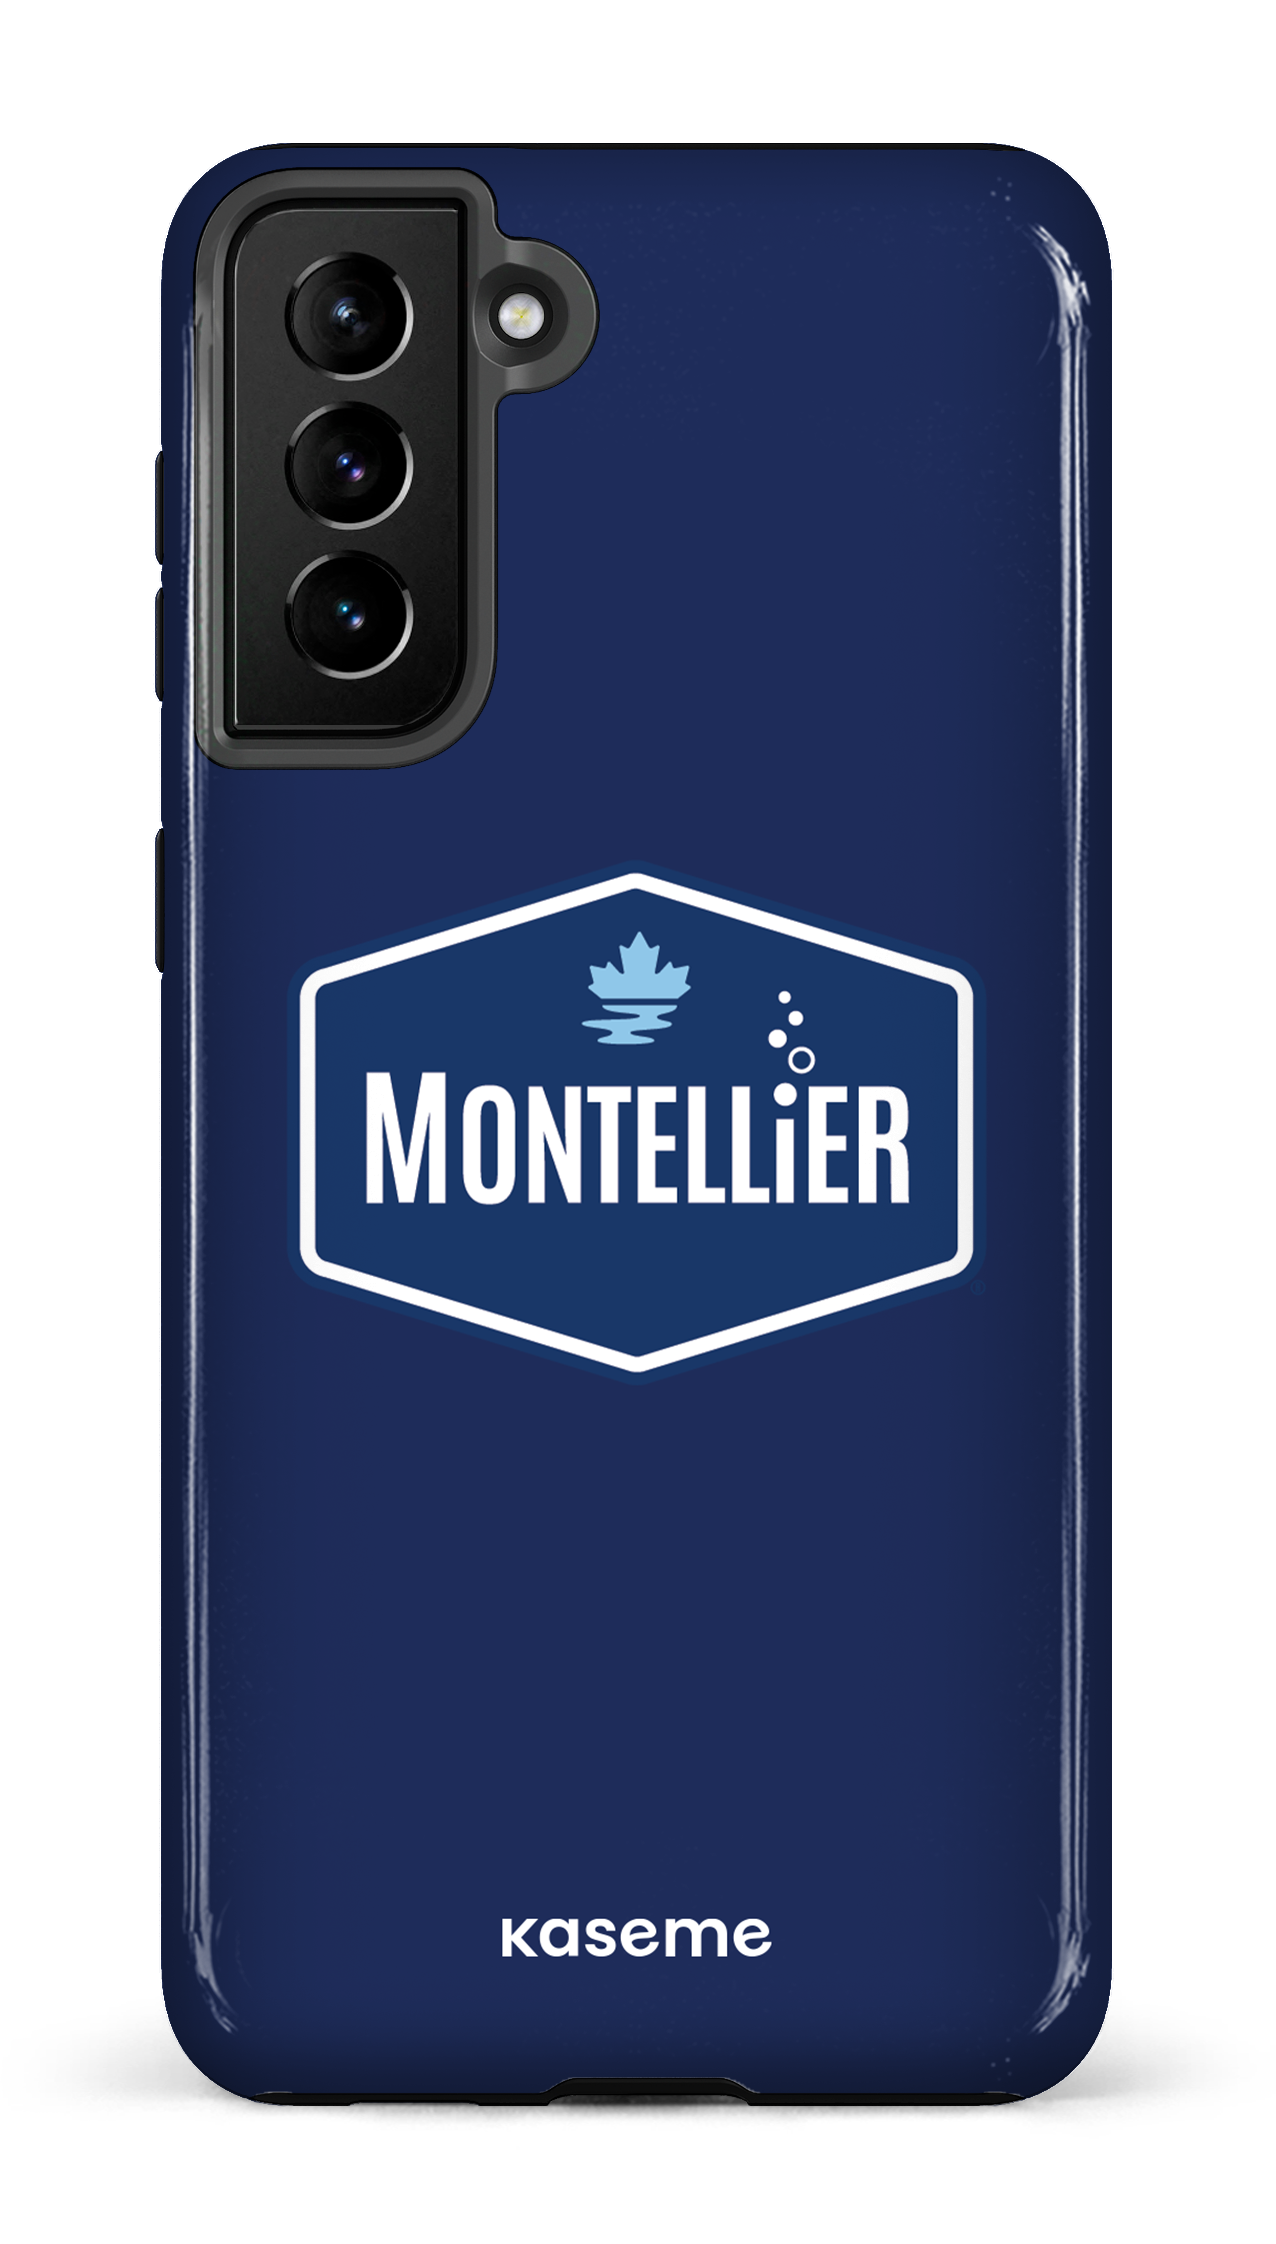 Montellier - Galaxy S21 Plus